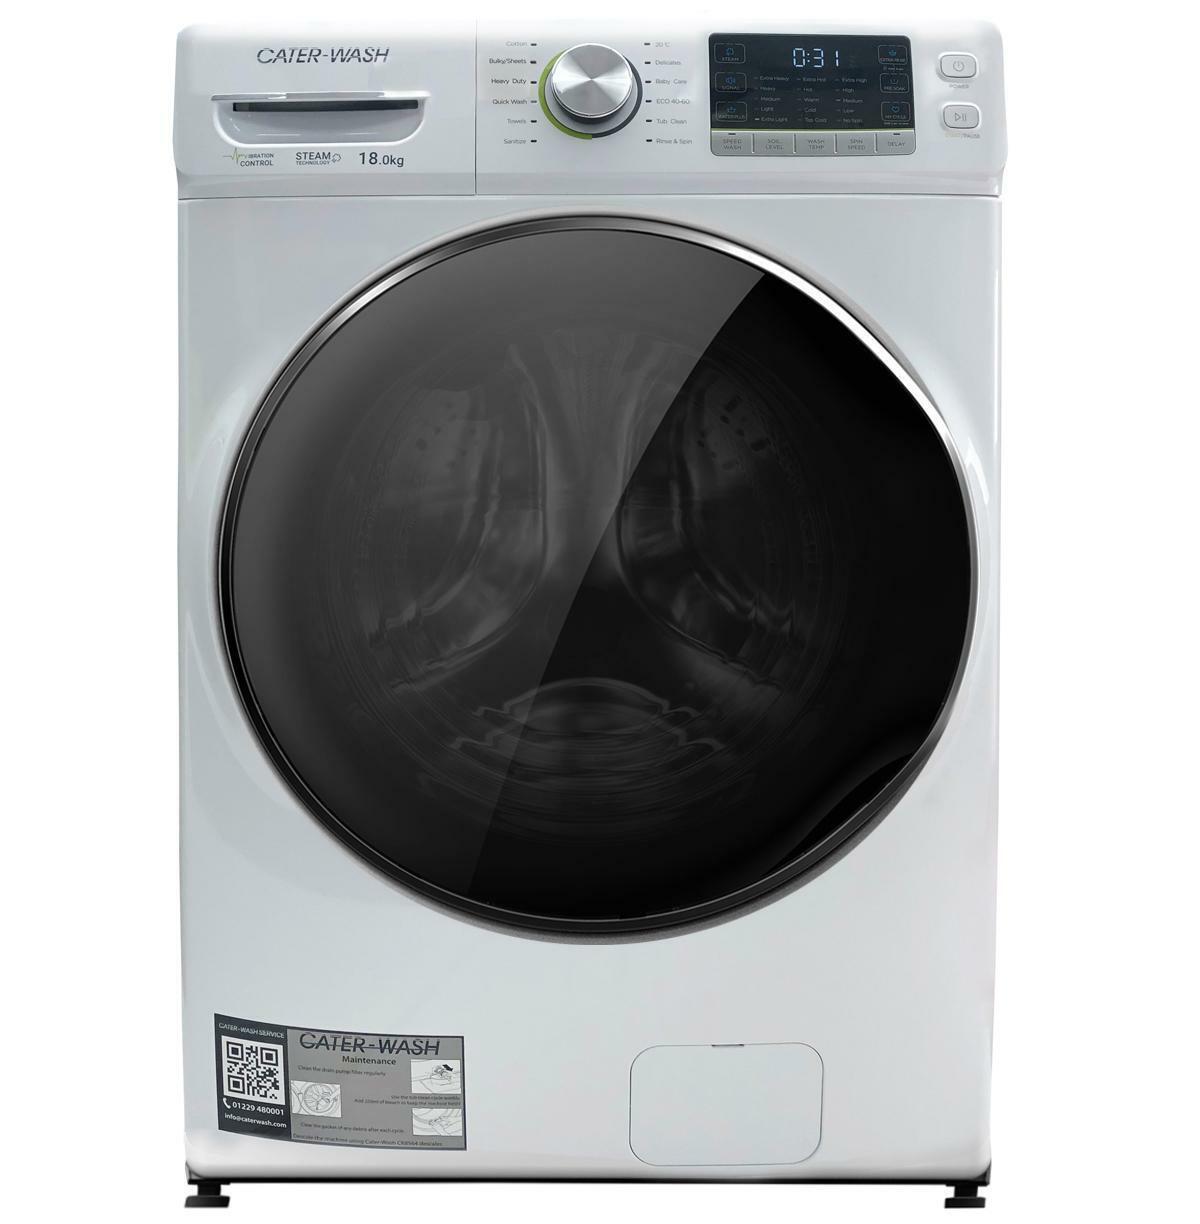 18kg Heavy Duty Washing Machine by Cater-Wash